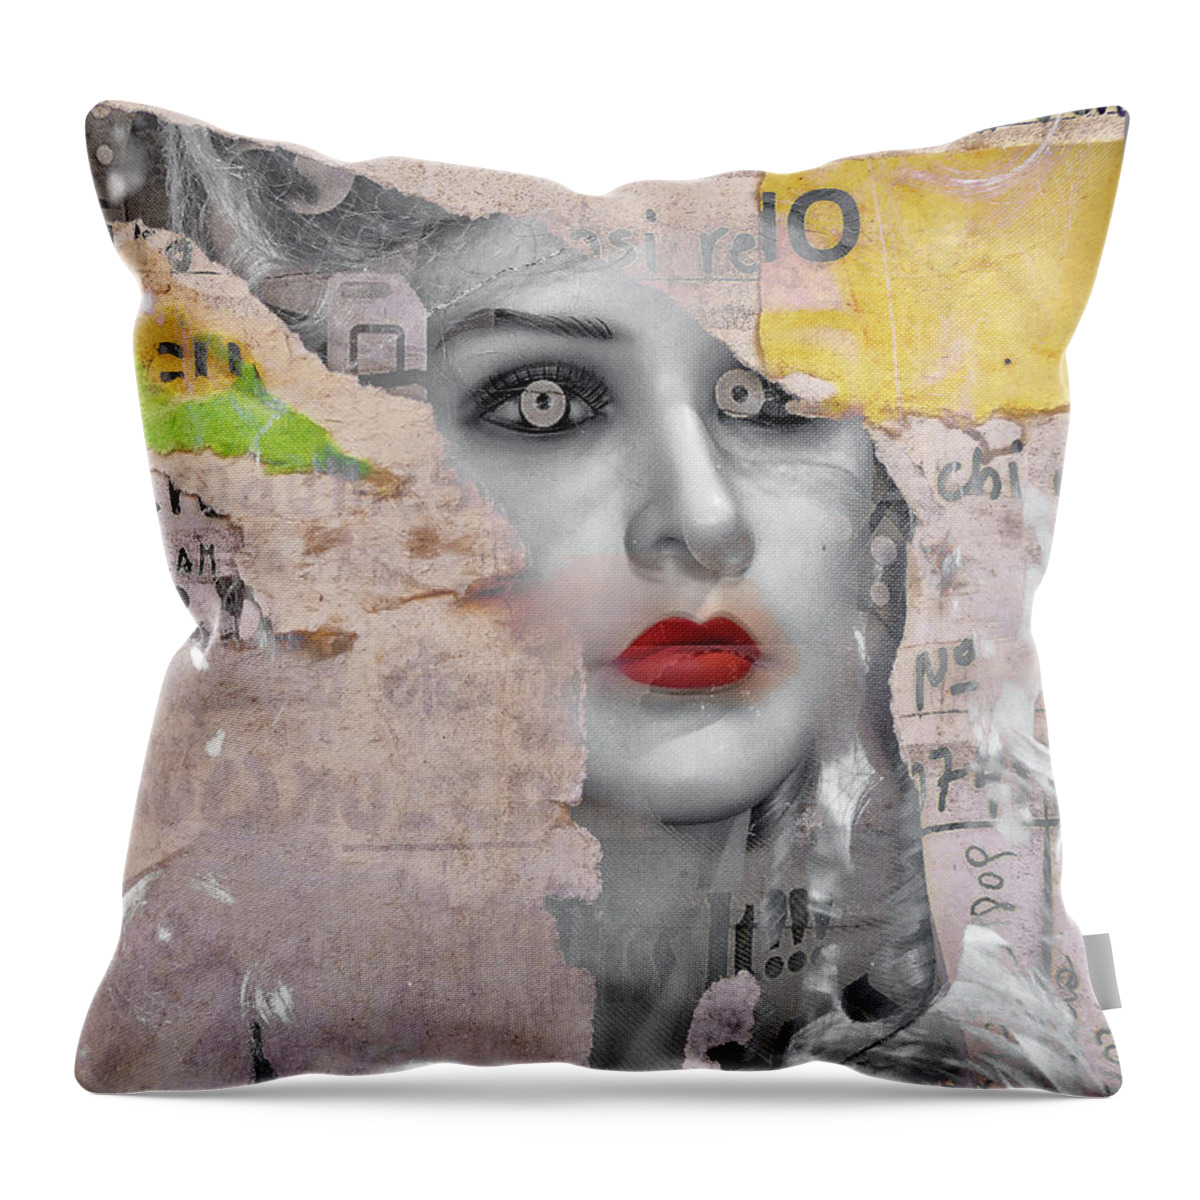 Woman Throw Pillow featuring the digital art Venetian beauty by Gabi Hampe